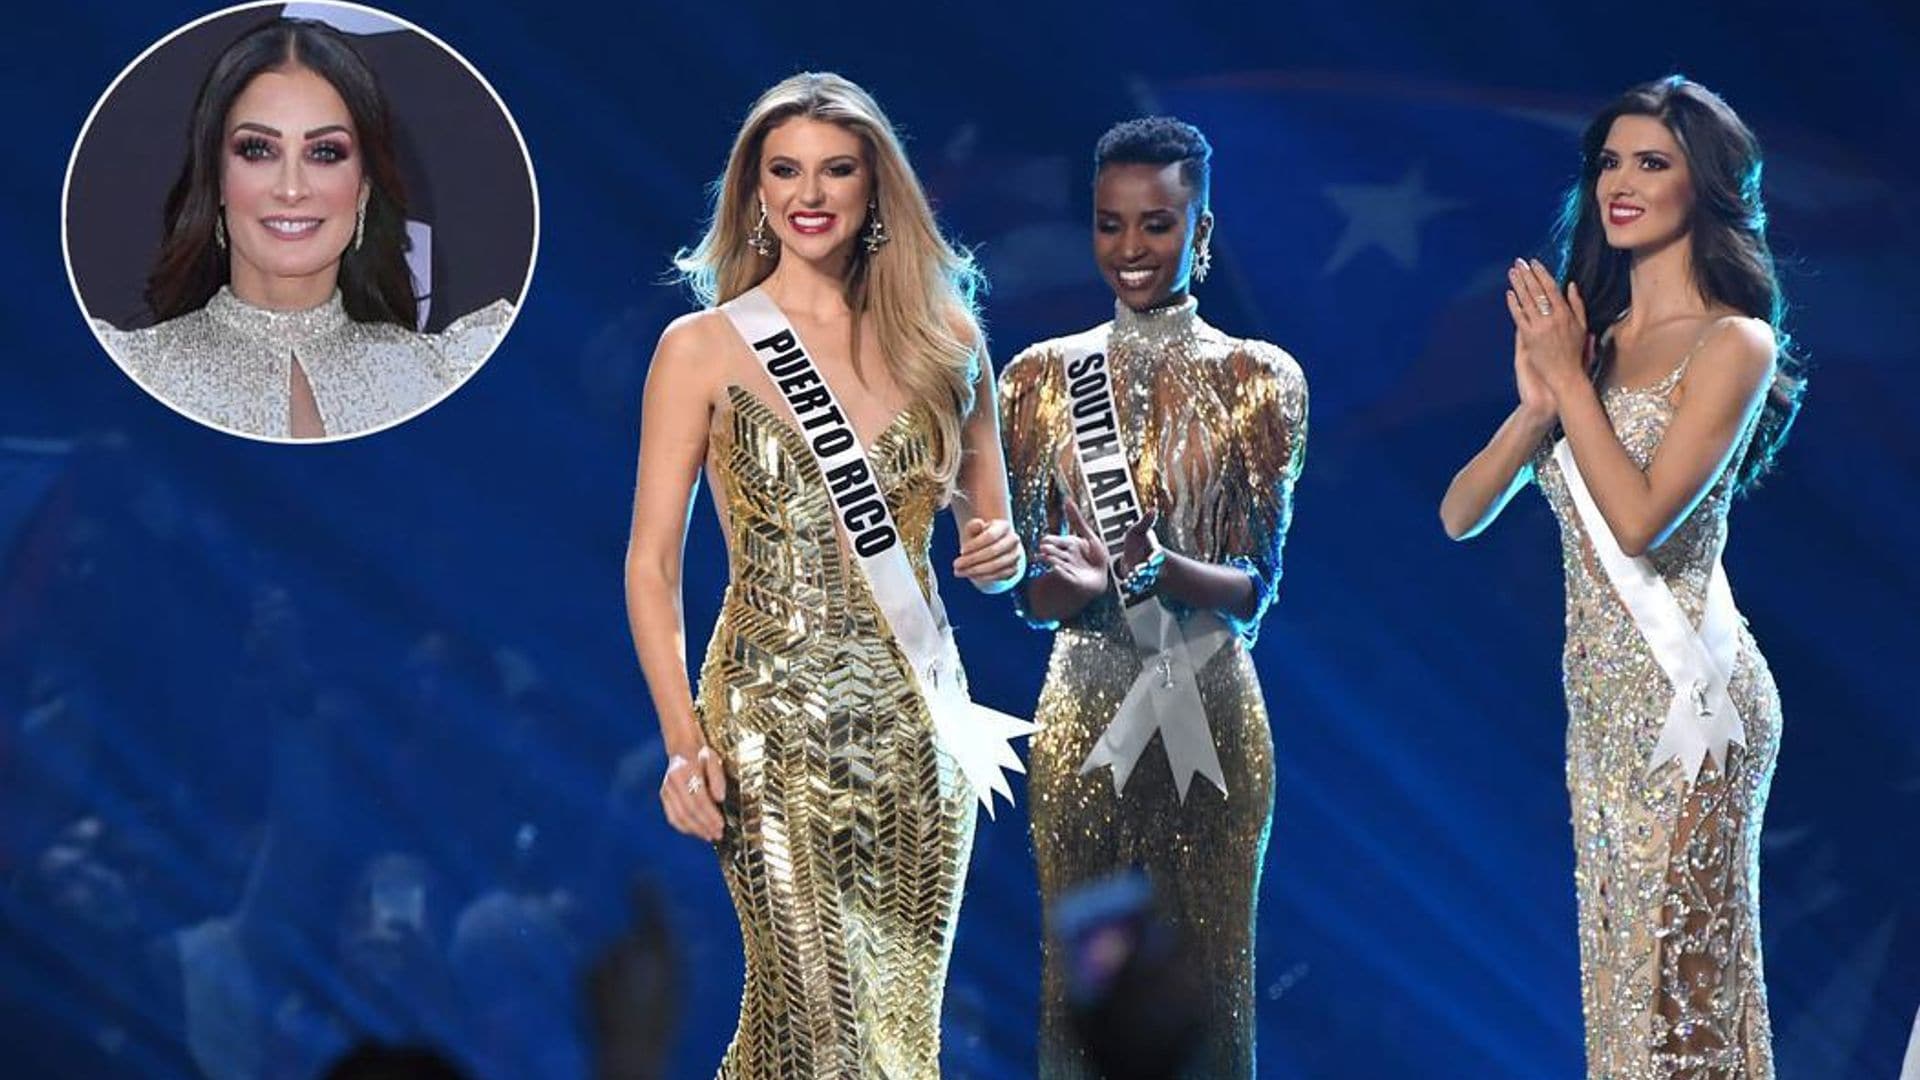 Marc Anthony’s ex Dayanara Torres shares pride in Miss Puerto Rico